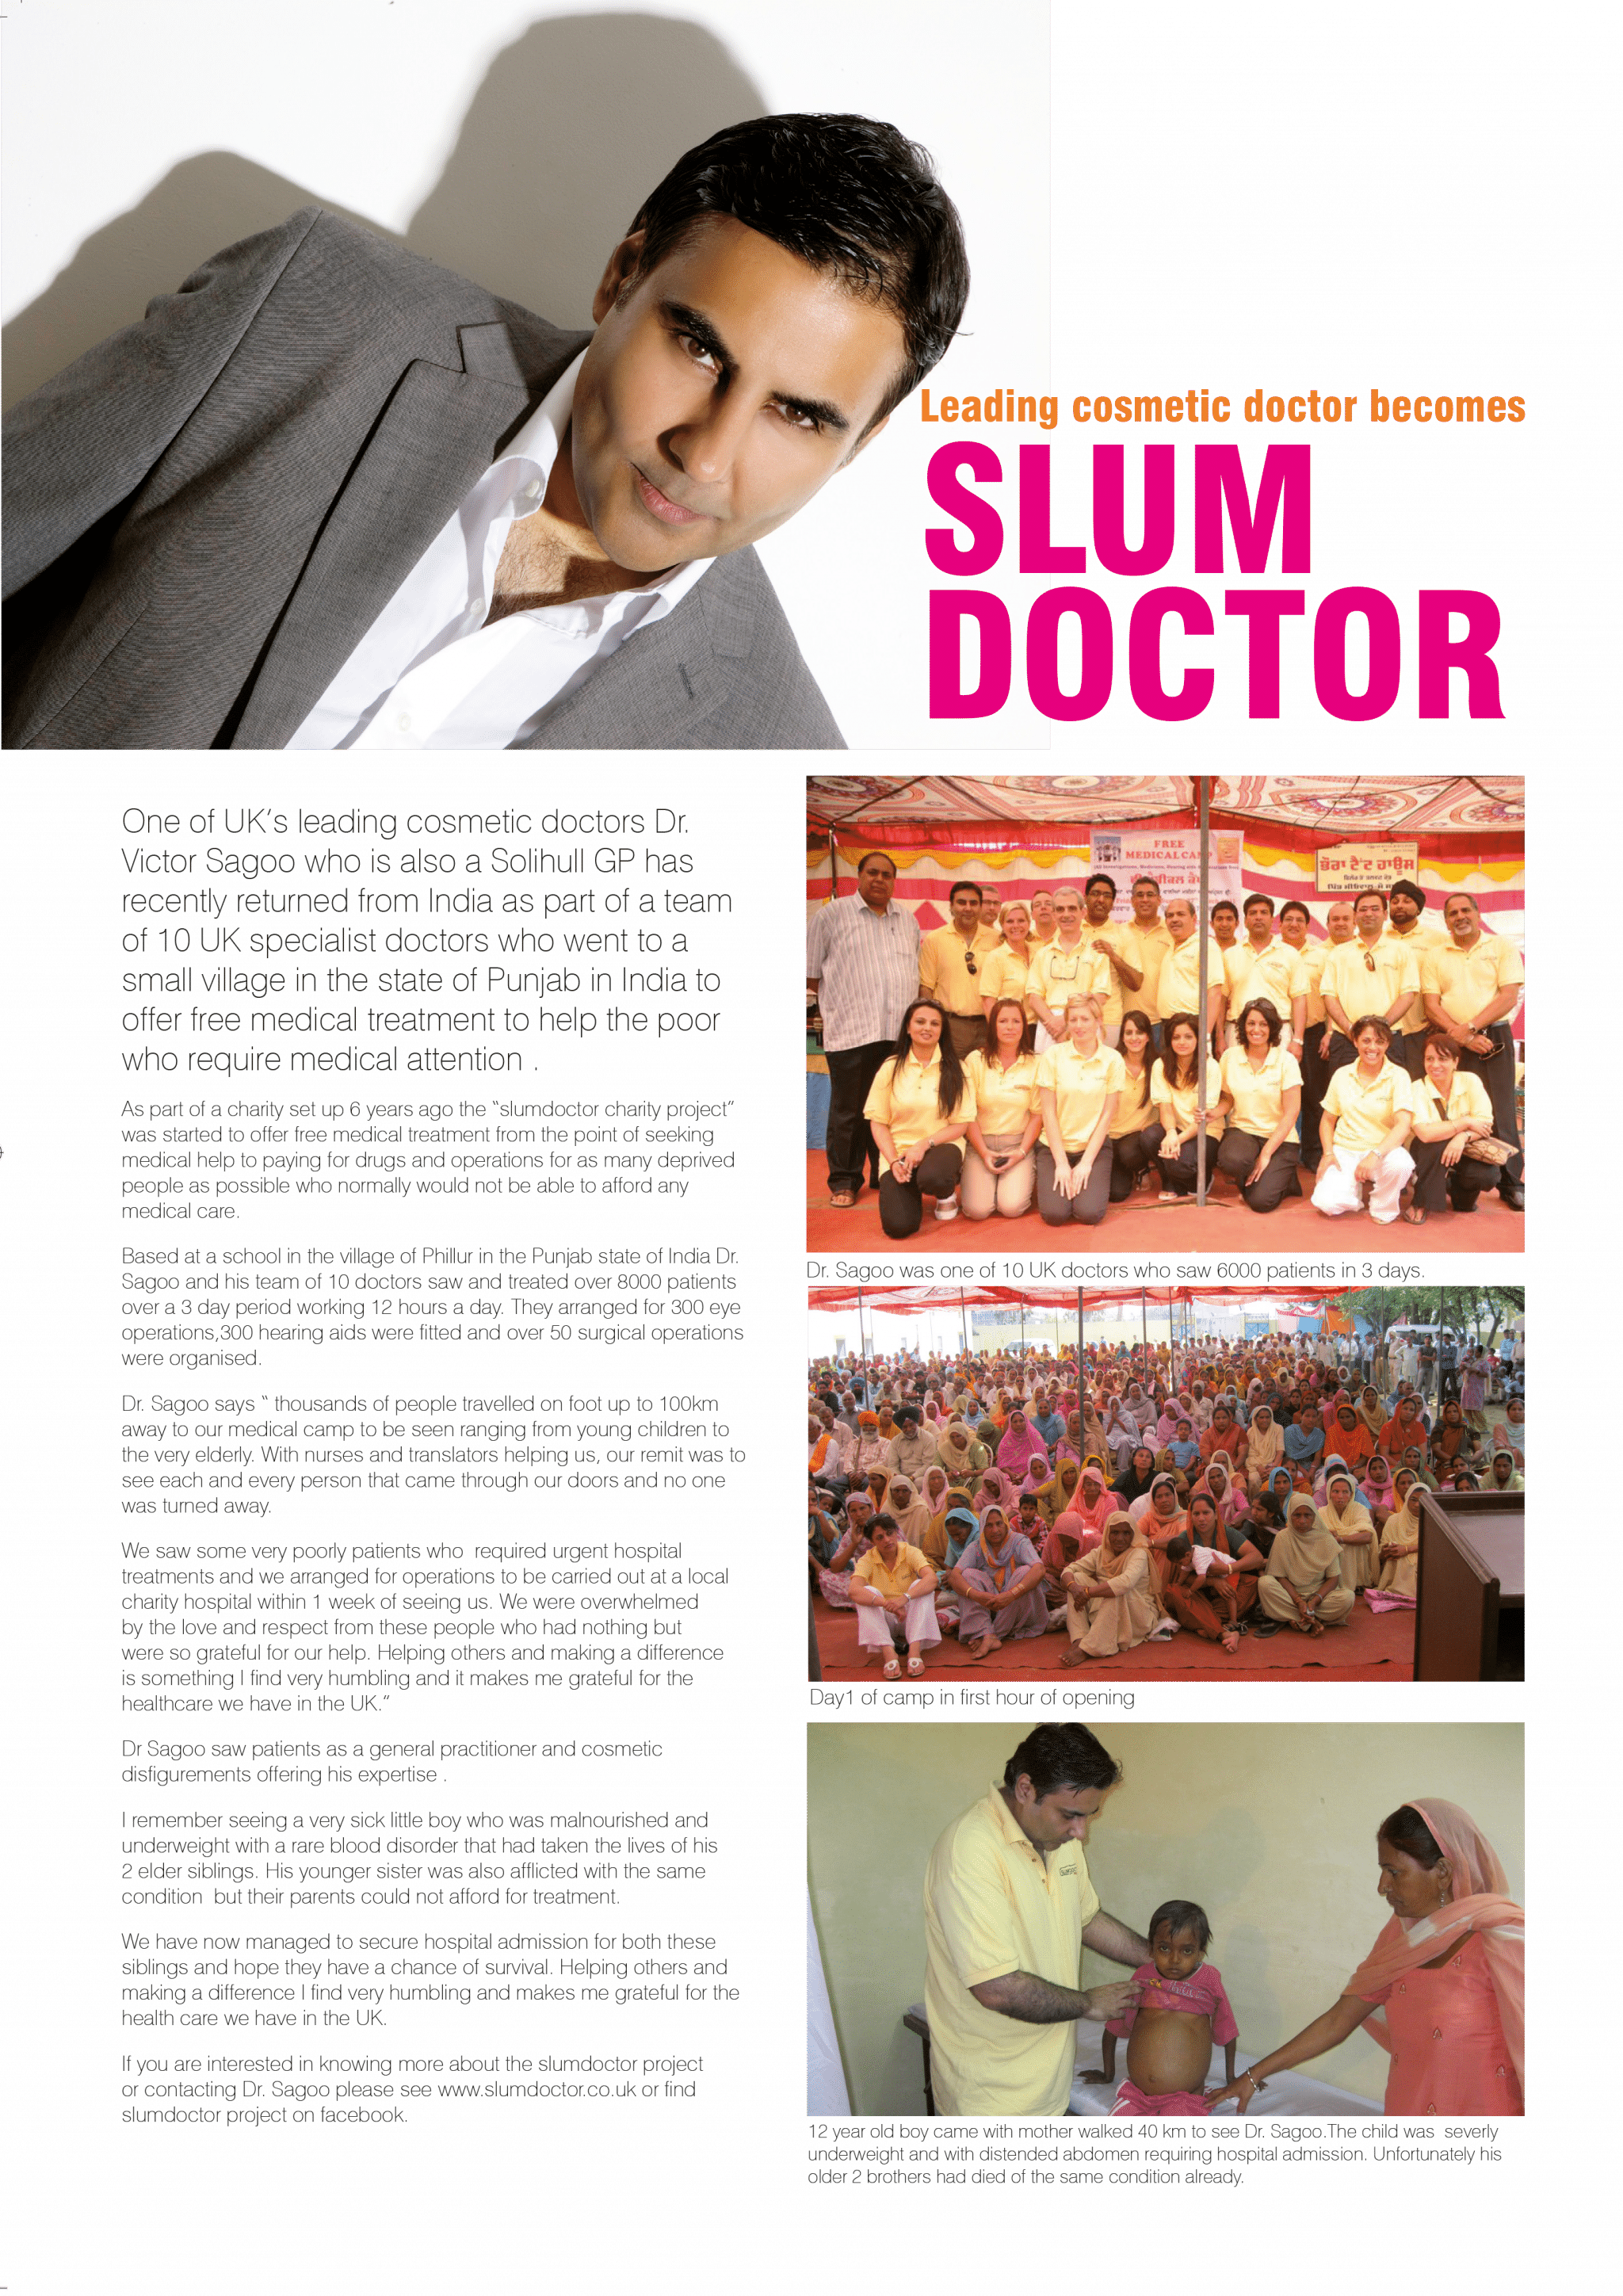 Slum Doctor Charity Work